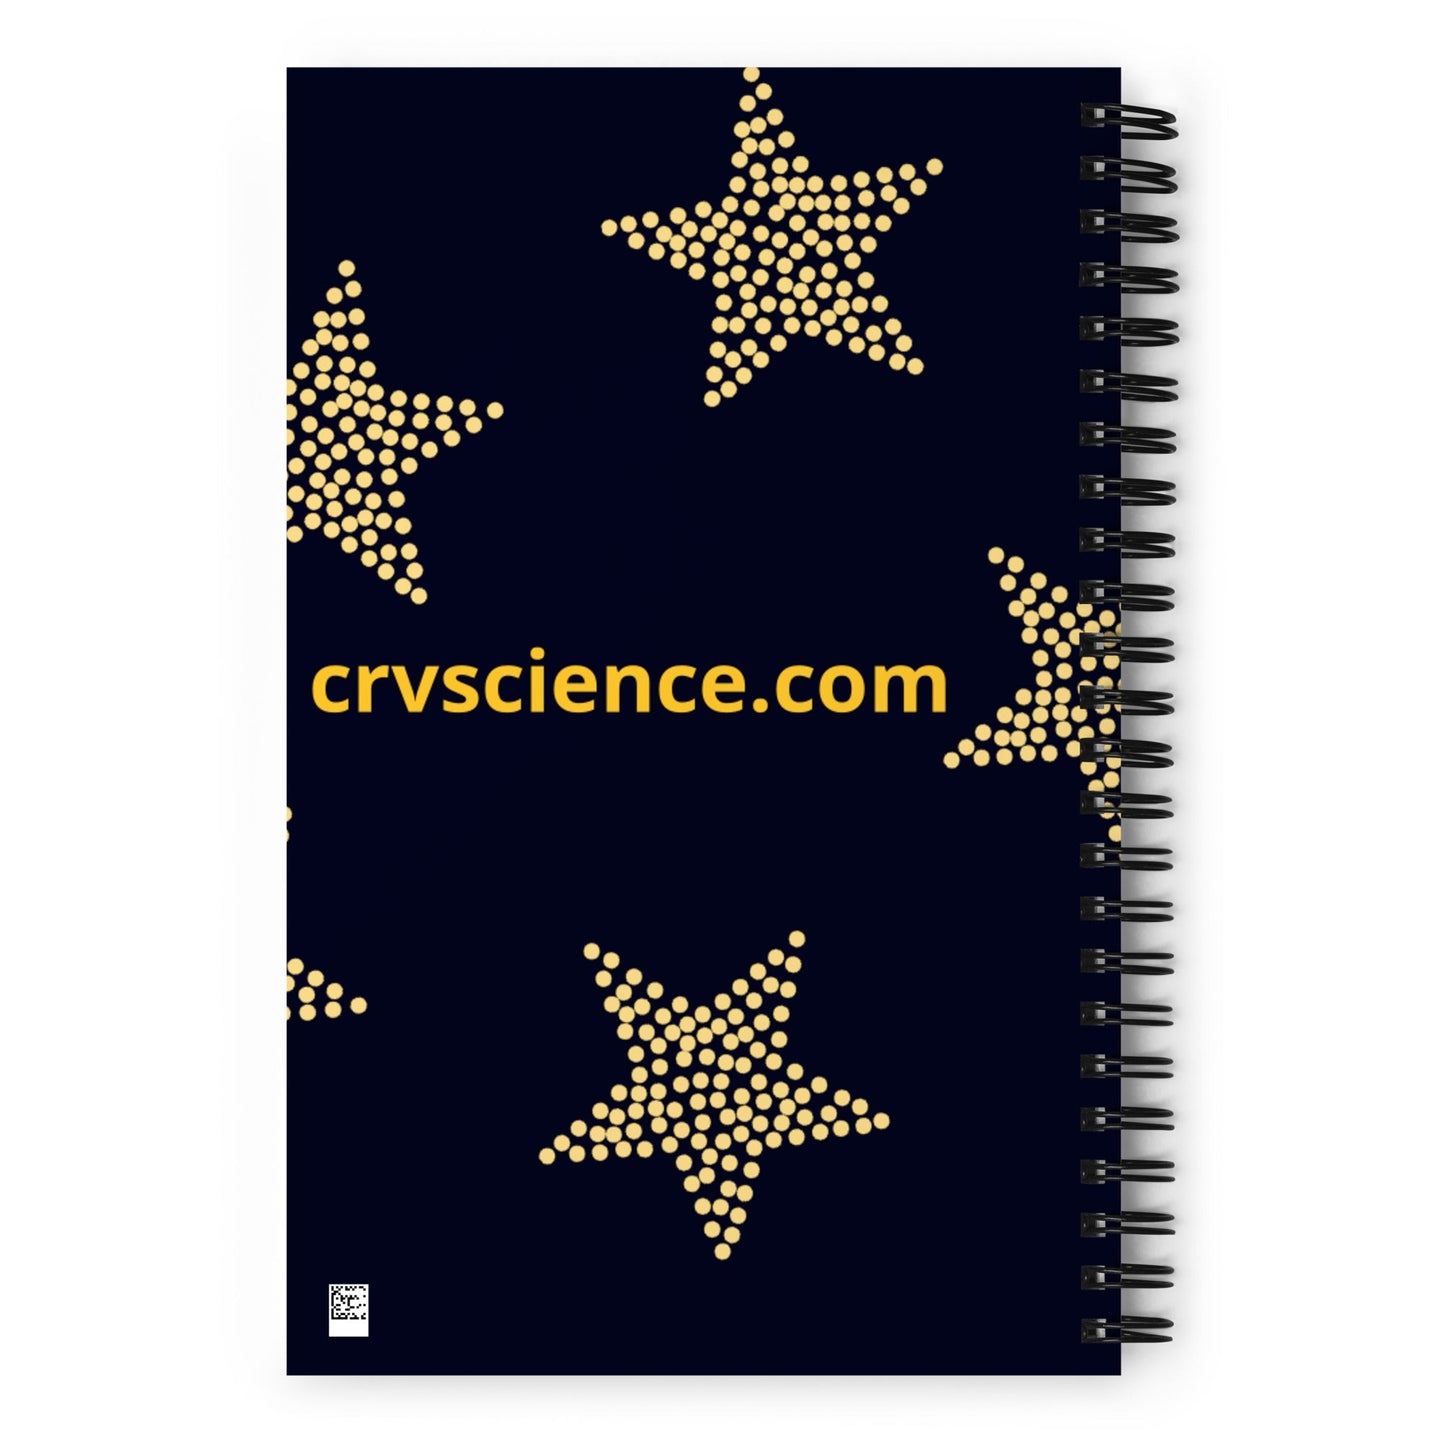 Corvallis Space Program - Spiral notebook - Science Label